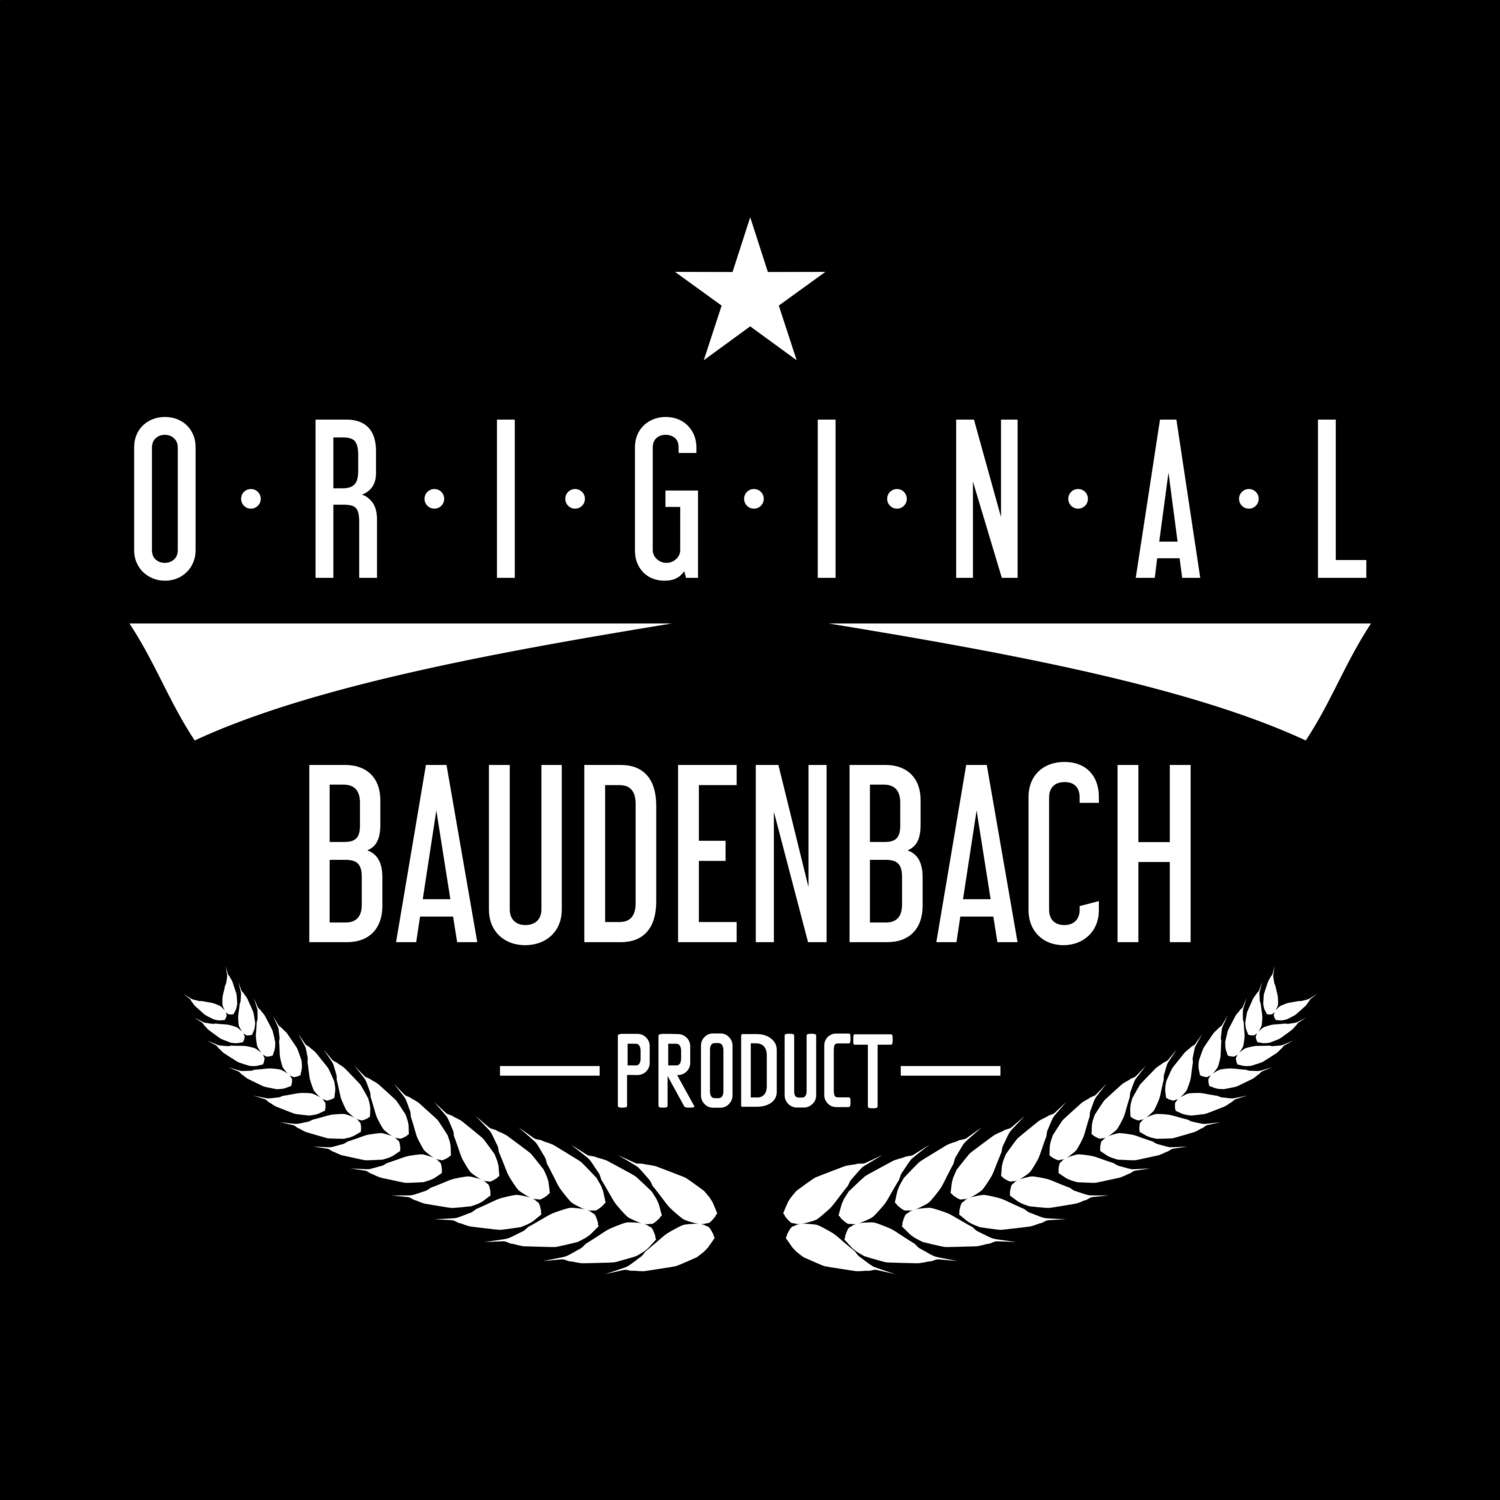 Baudenbach T-Shirt »Original Product«